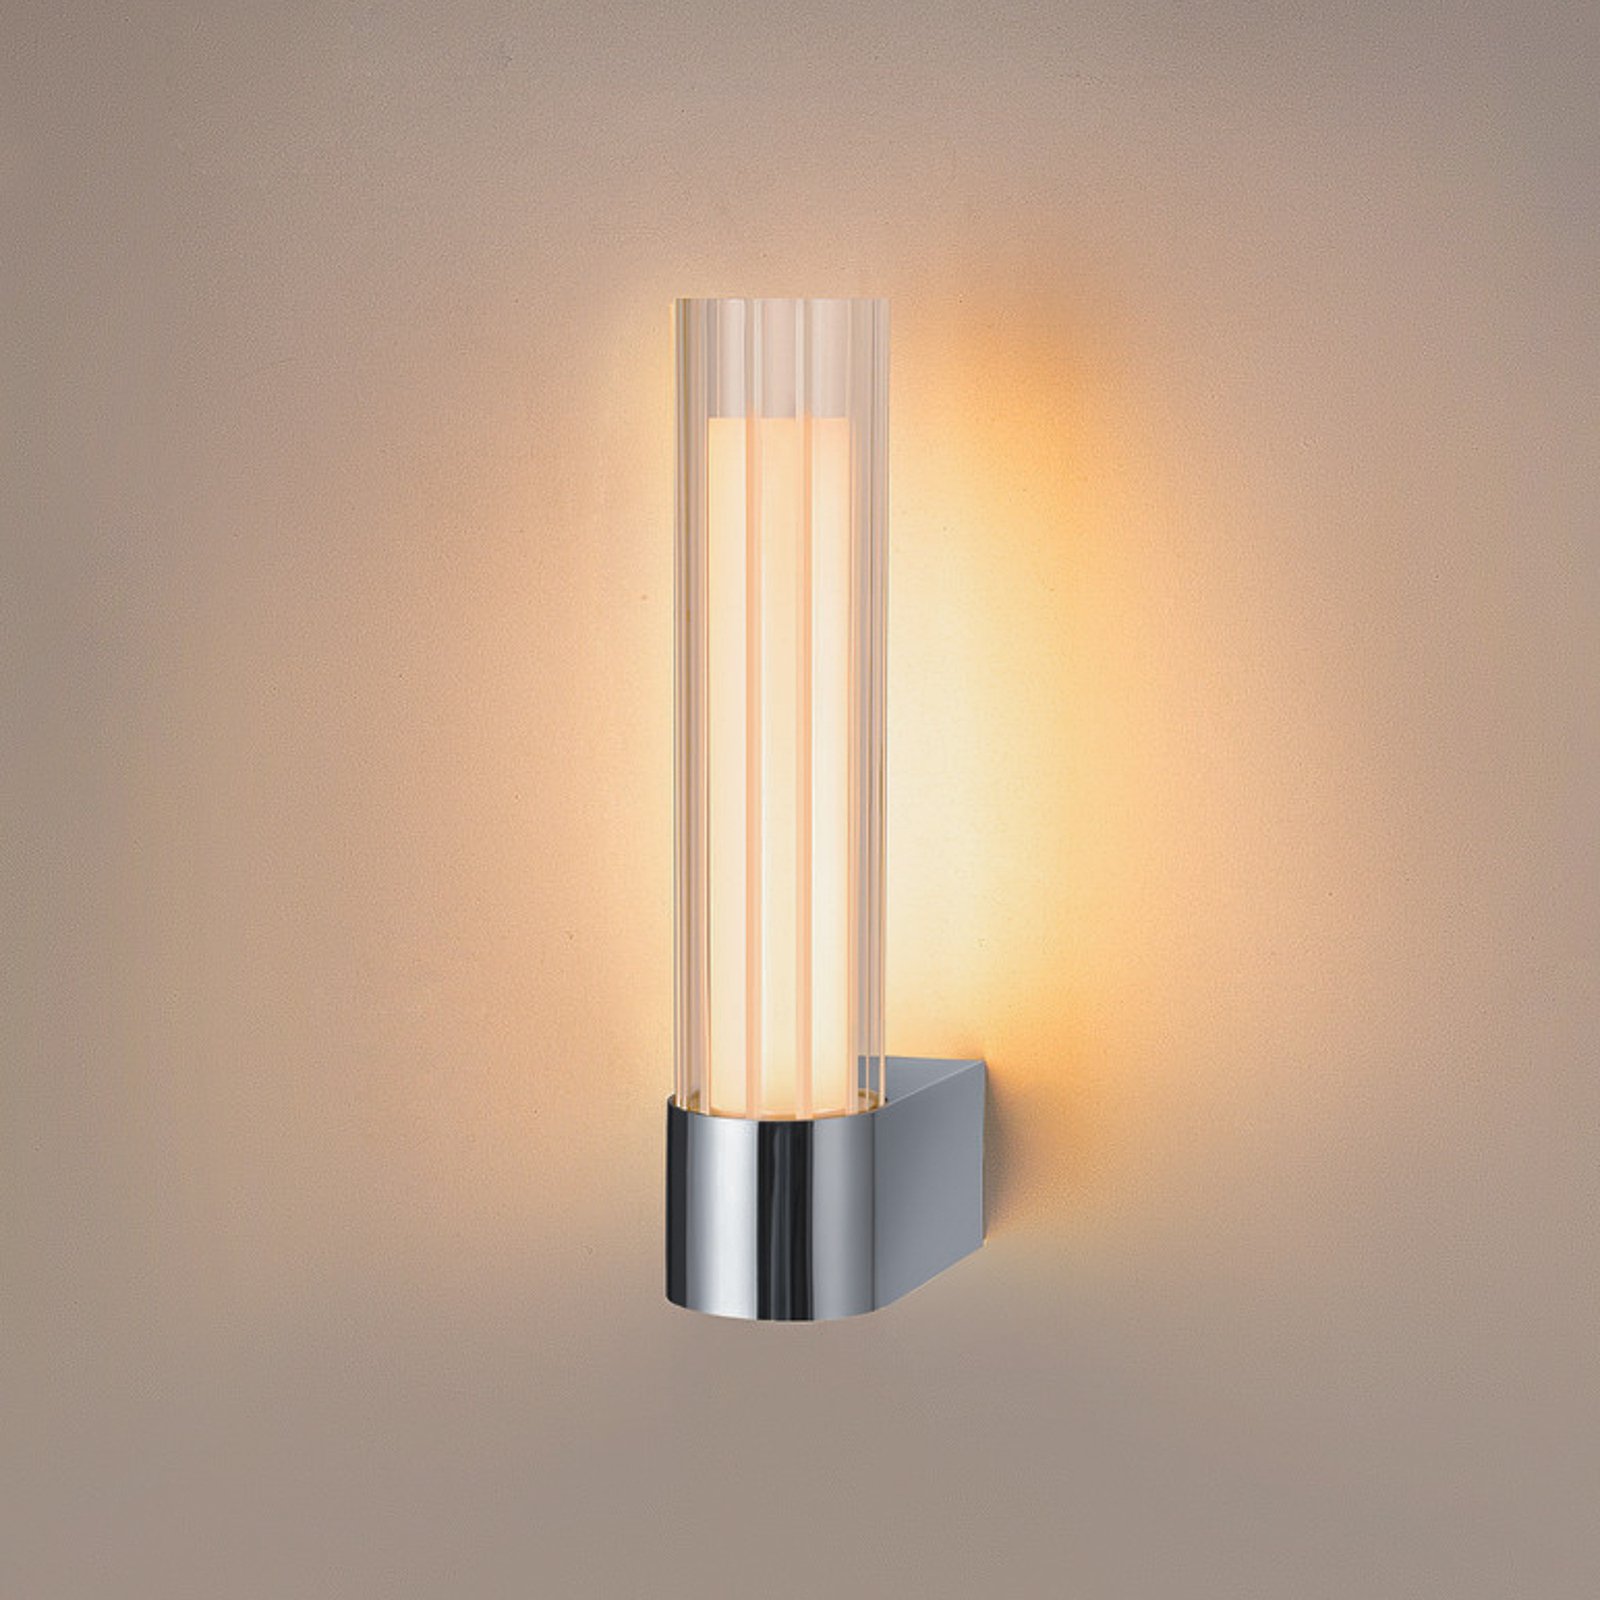 SLV badkamer wandlamp Lygant enkel, chroom, aluminium